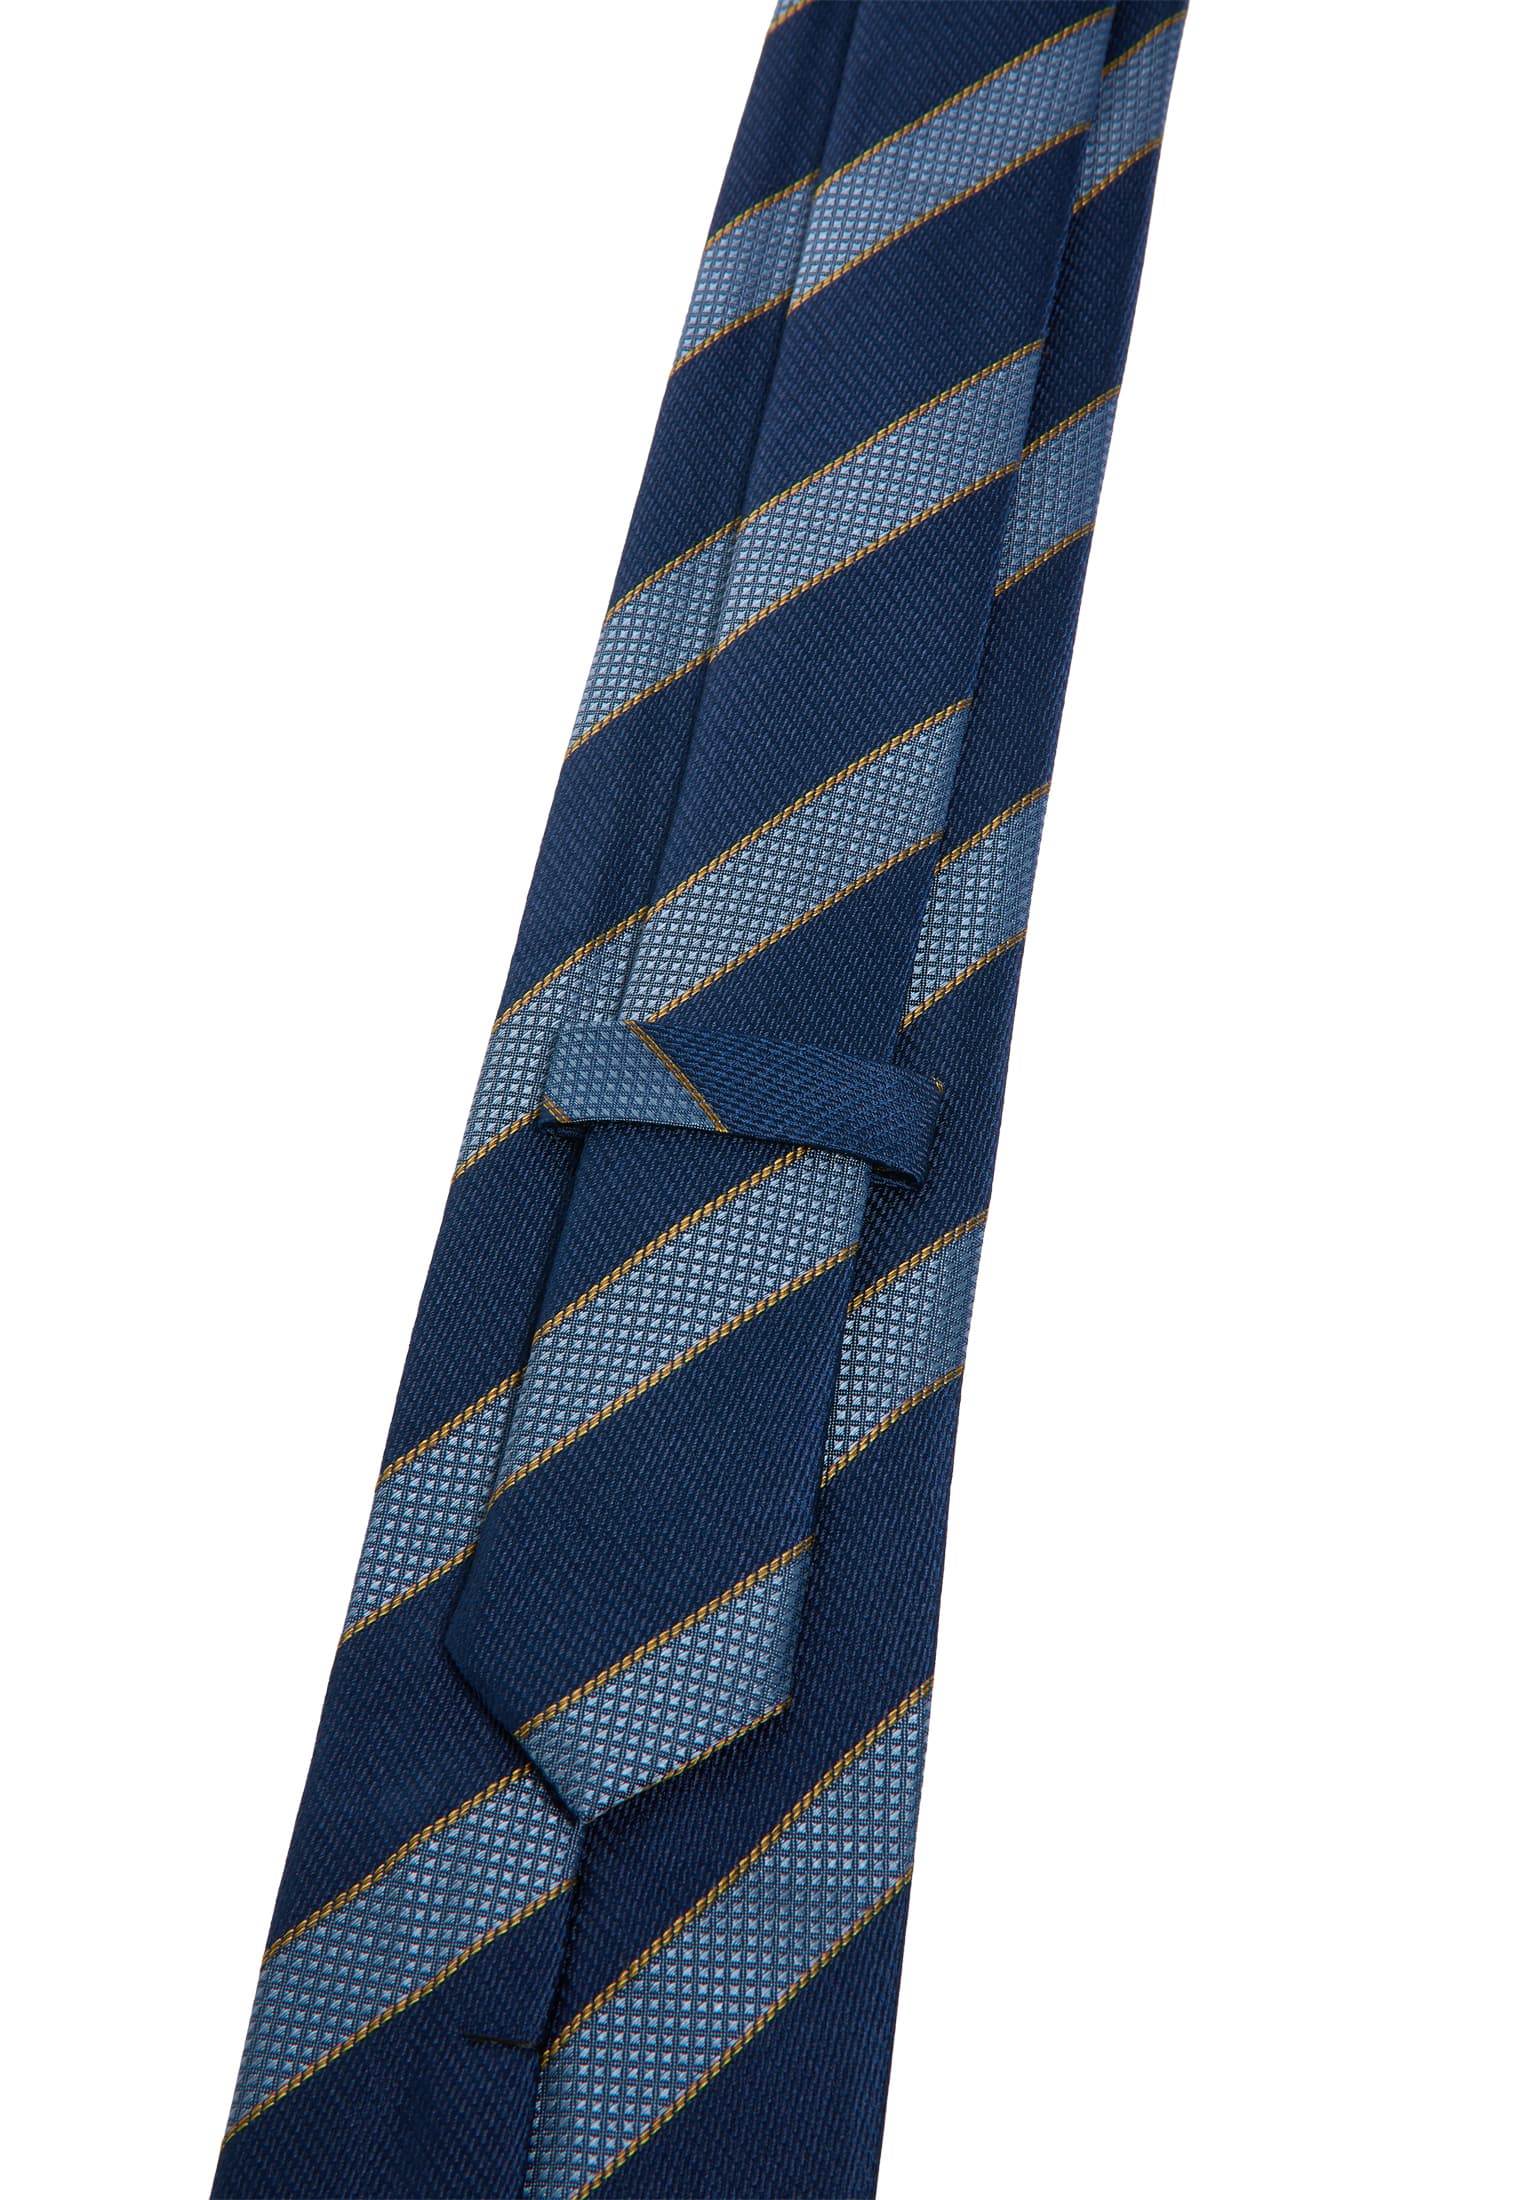 Krawatte in 142 1AC01903-01-81-142 | | | dunkelblau gestreift dunkelblau